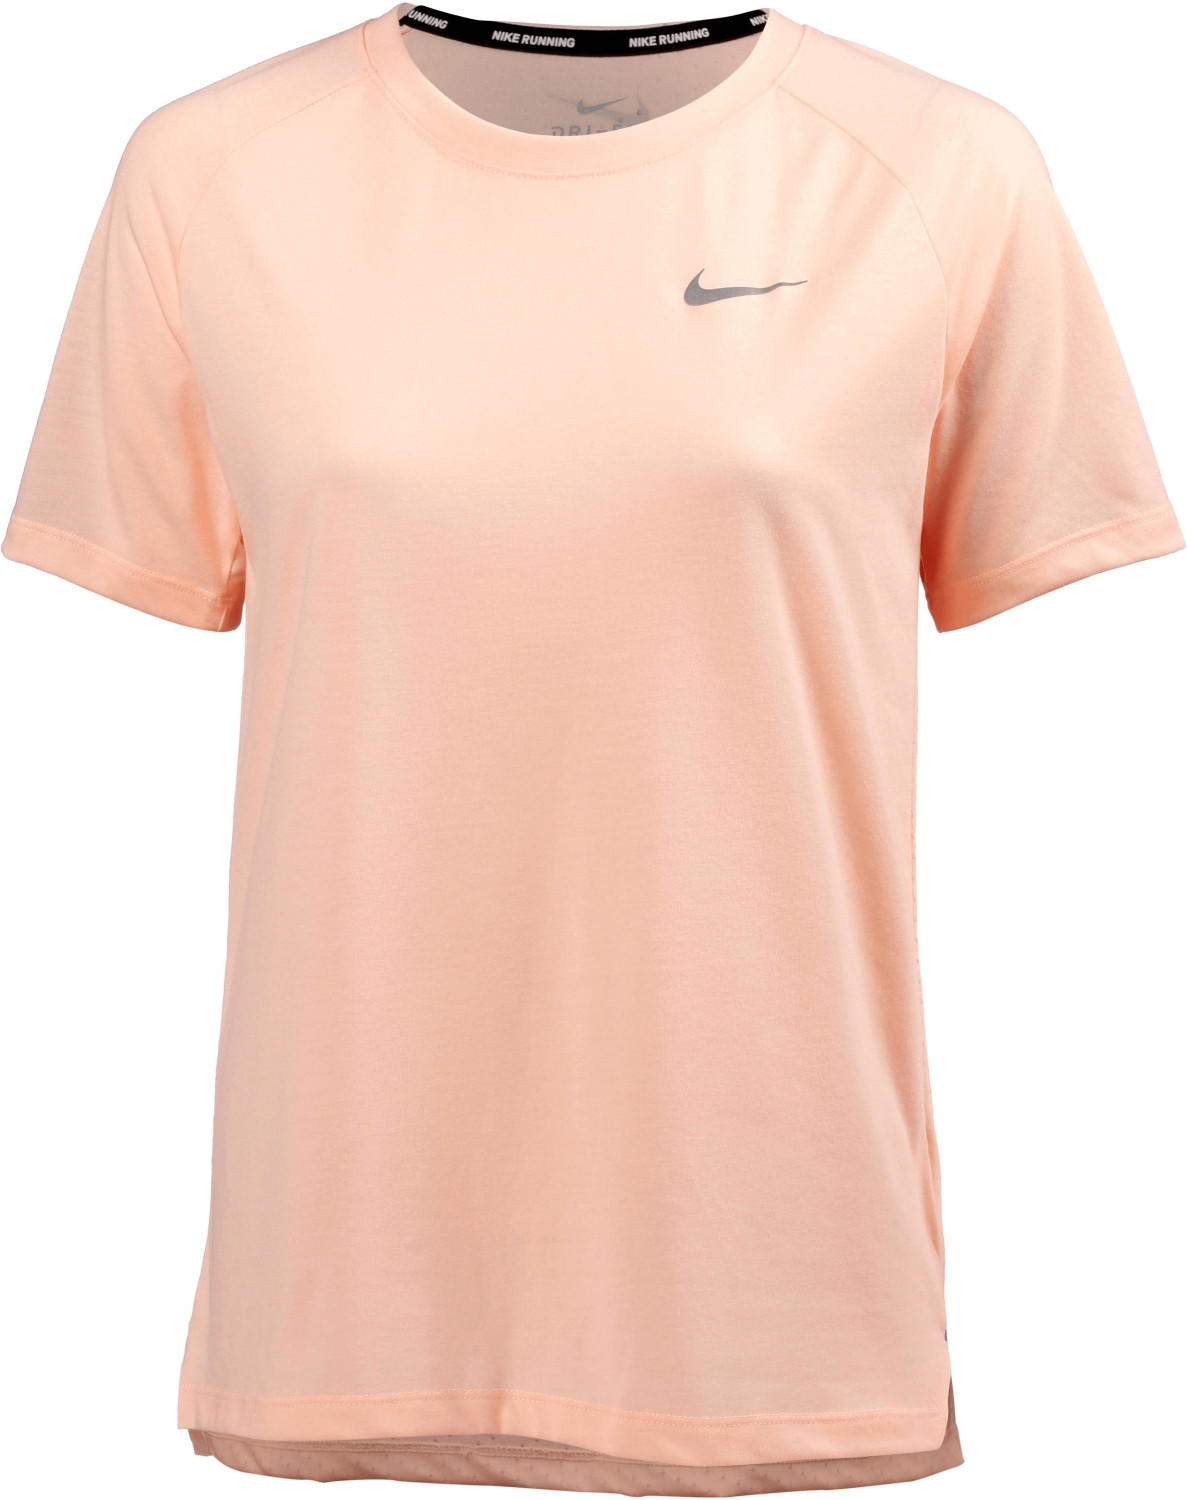 Nike Tailwind Running Shirt Women